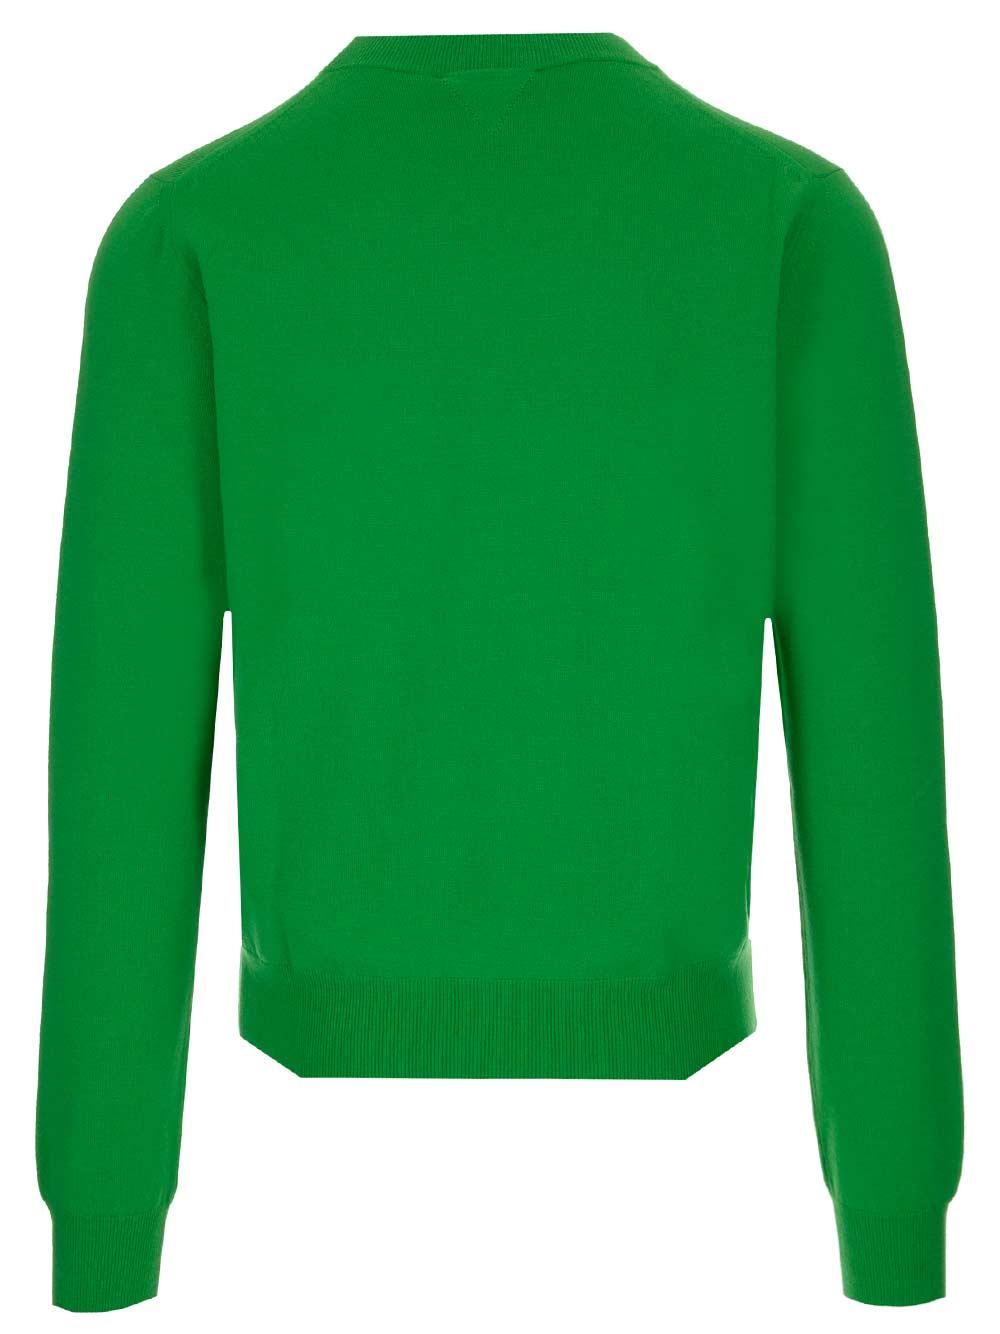 Bottega Veneta Stretch Wool Knit Sweater in Green for Men - Lyst